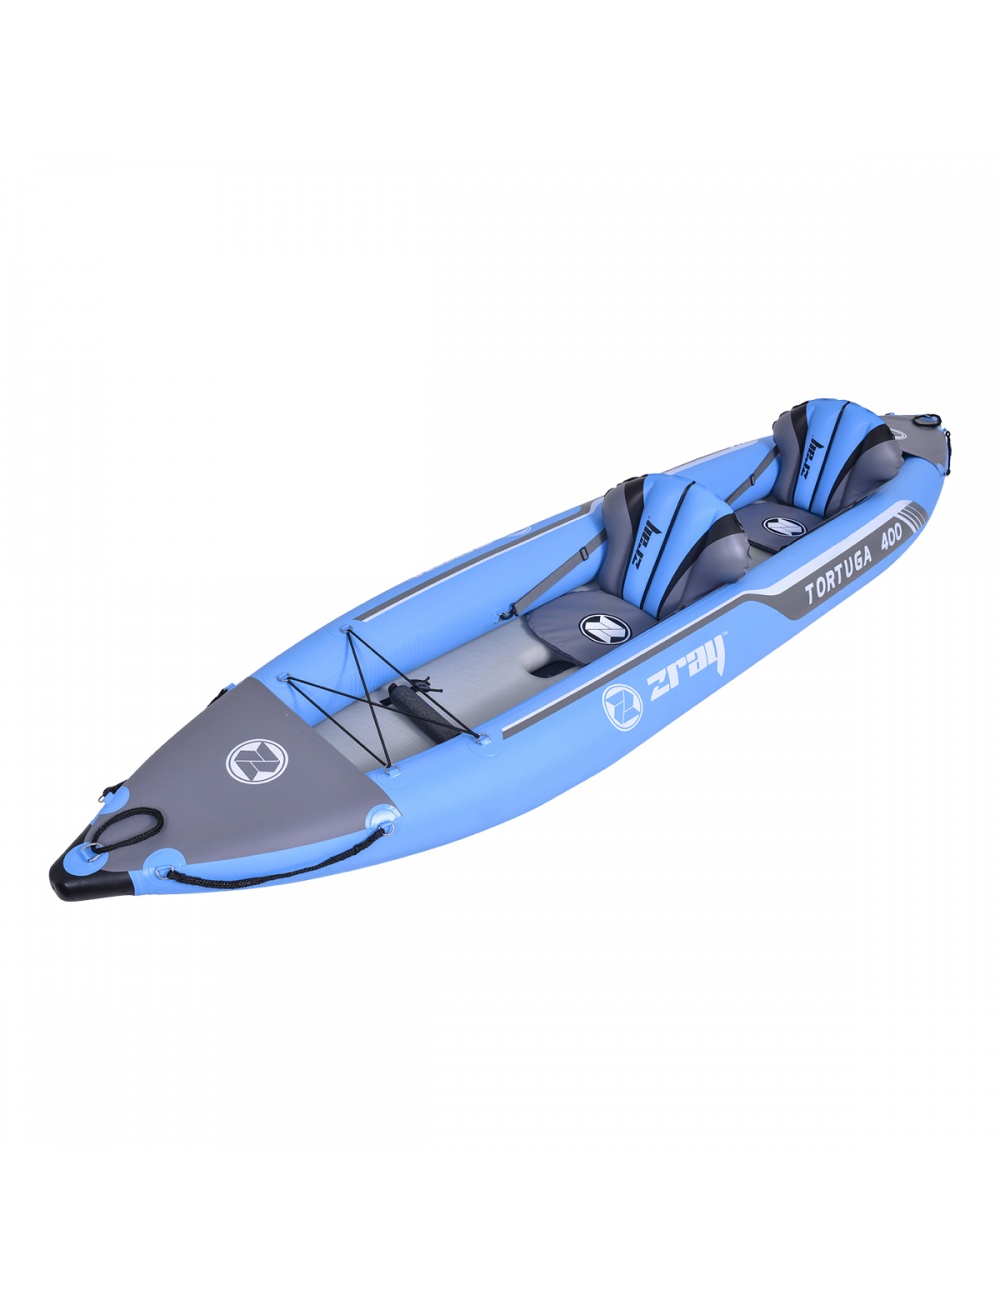 Nuevo Kayak Hinchable Zray Tortuga 400 Modelo 2021 - azul-oscuro - 